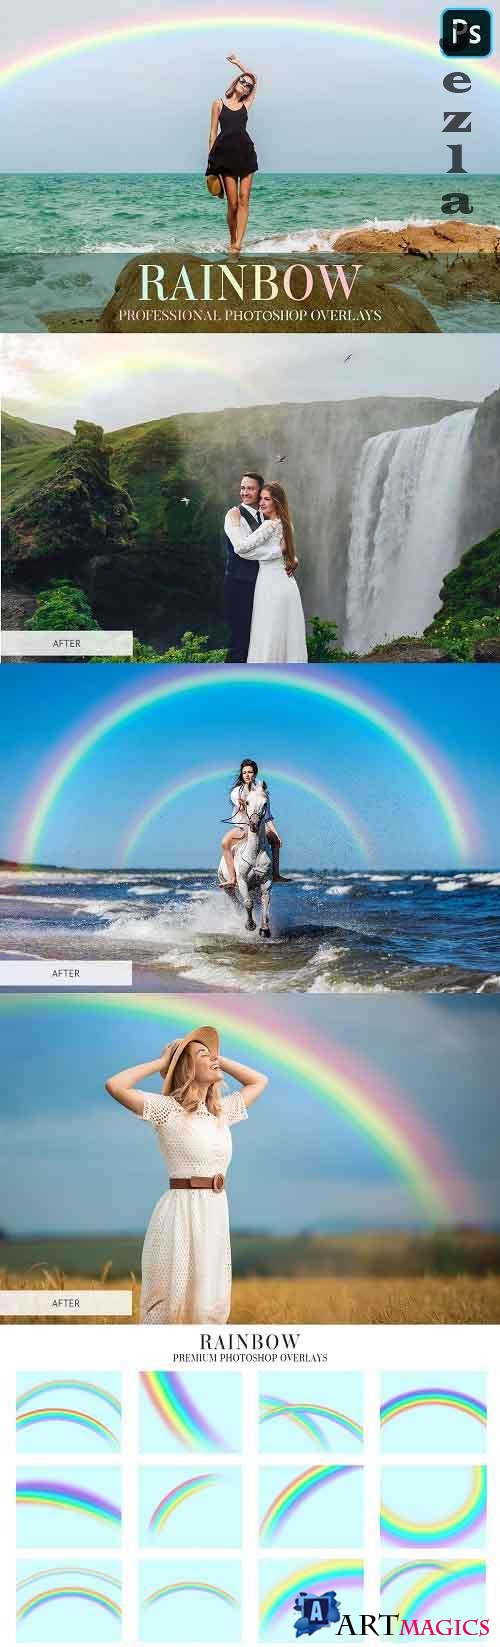 Rainbow Overlays Photoshop 4940455